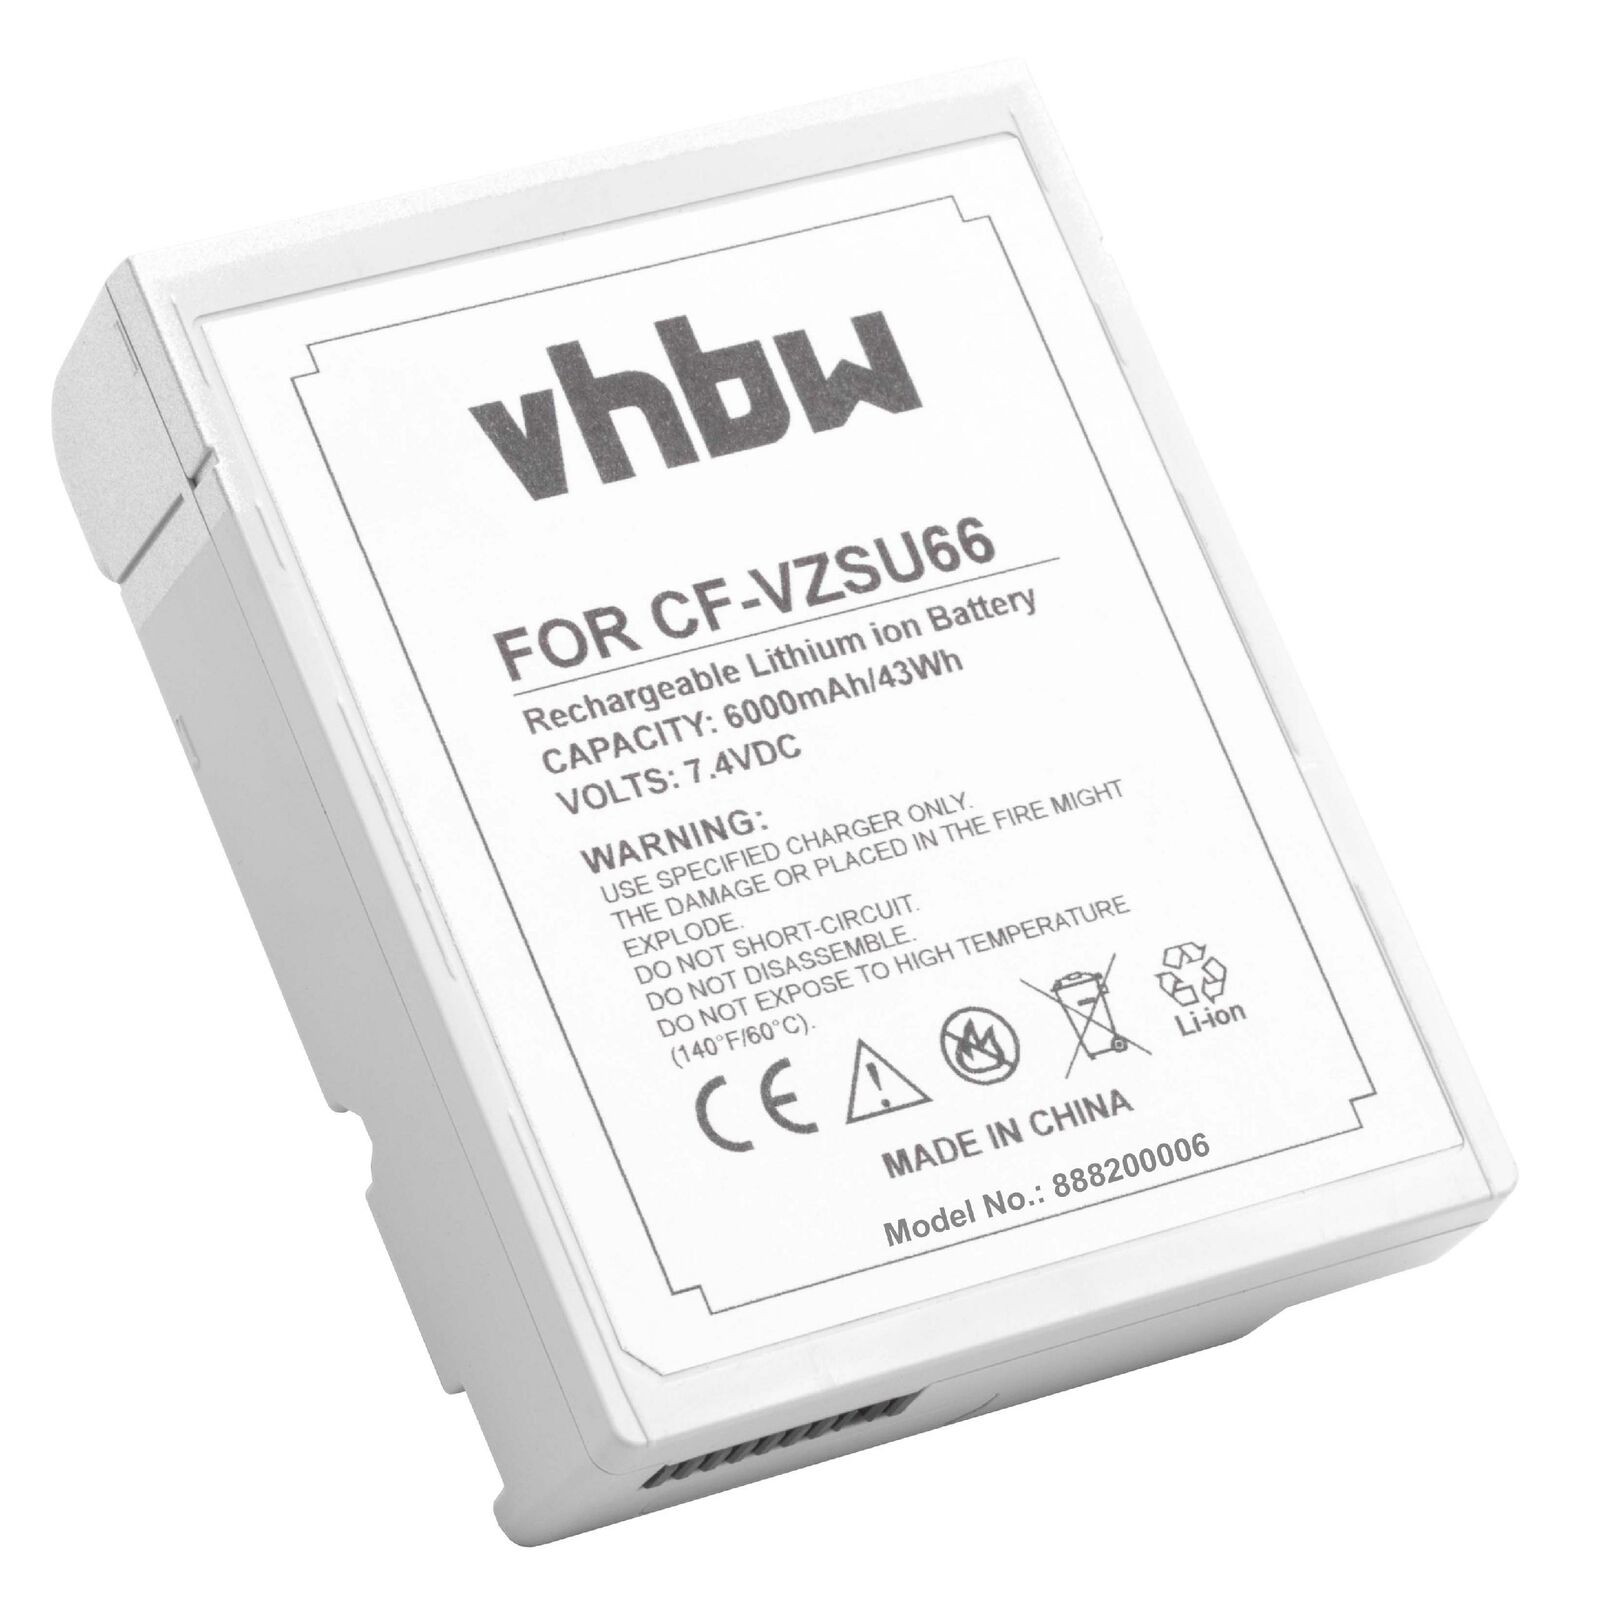 Batería para CF-VZSU66U Panasonic CF-C1 MK1 MK2 CF-C1MDB21 CF-C1BWFAZ1M C1BTFAG1M(compatible)